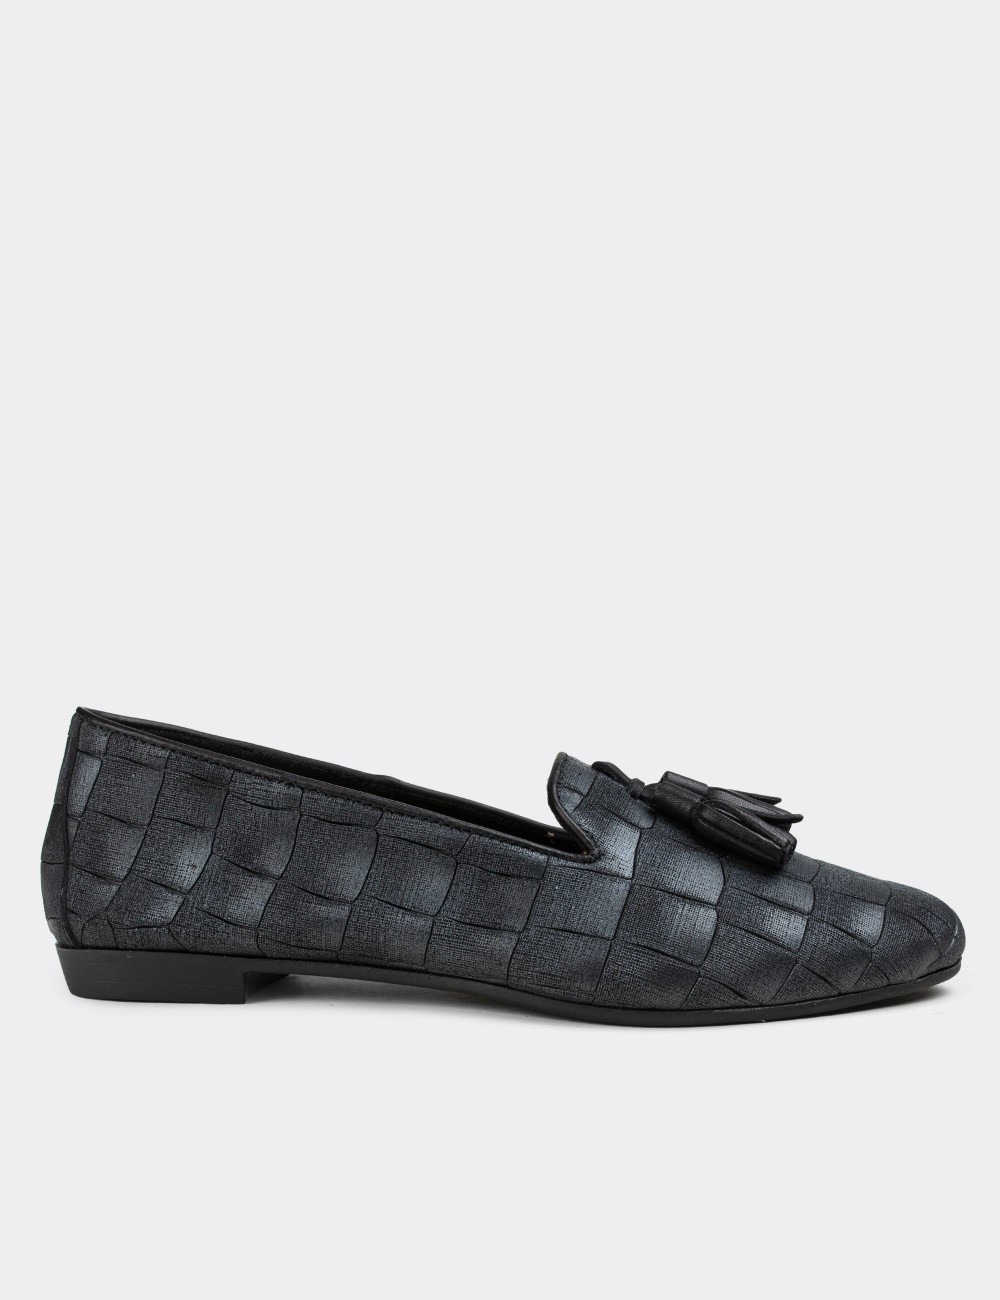 Anthracite Nubuck Leather Loafers  - E3204ZANTC01